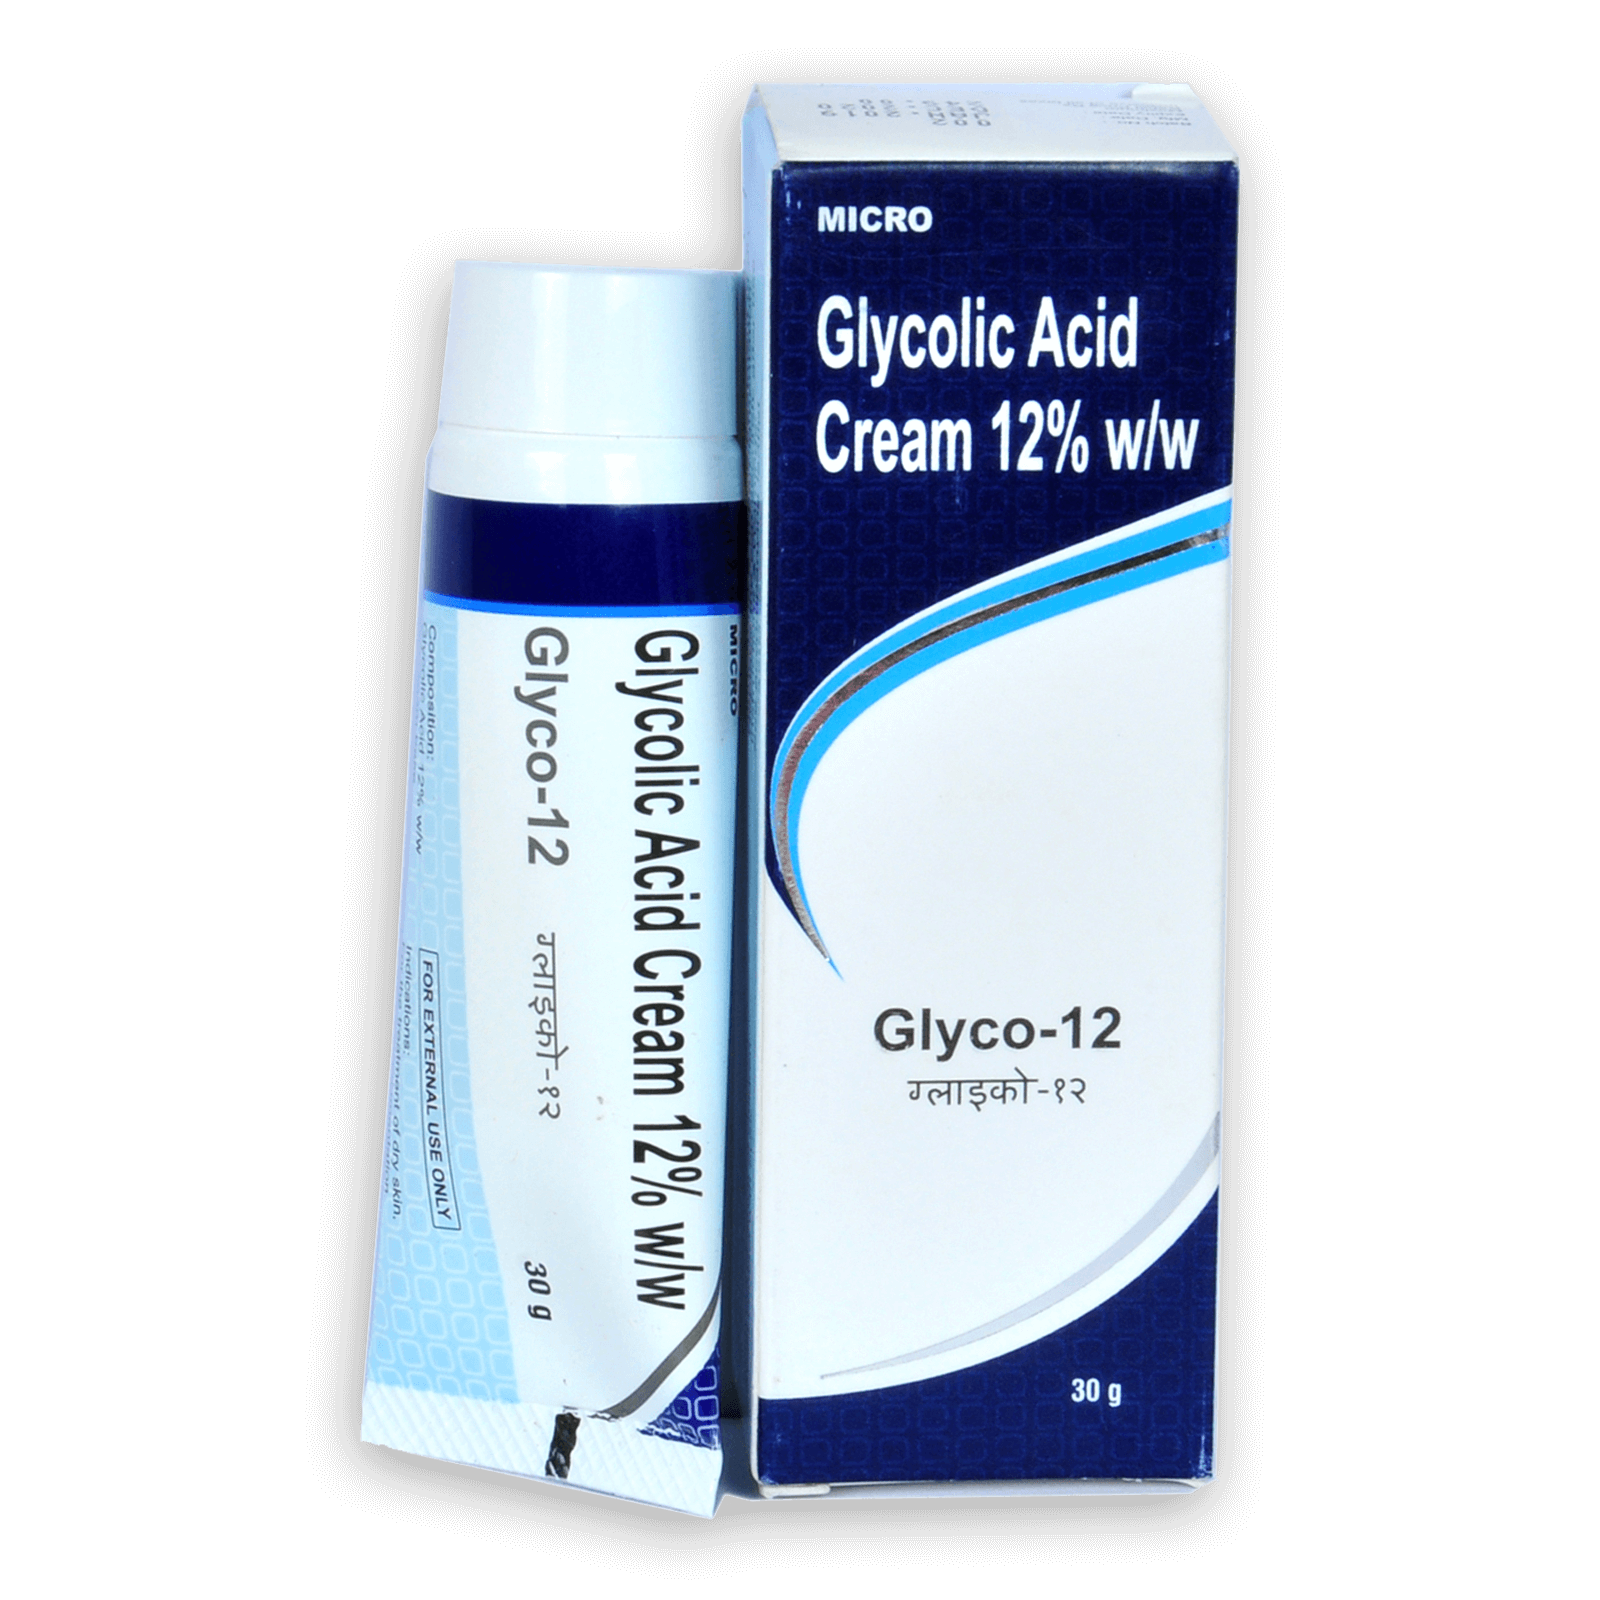 Glycolic Acid Cream - Homecare24